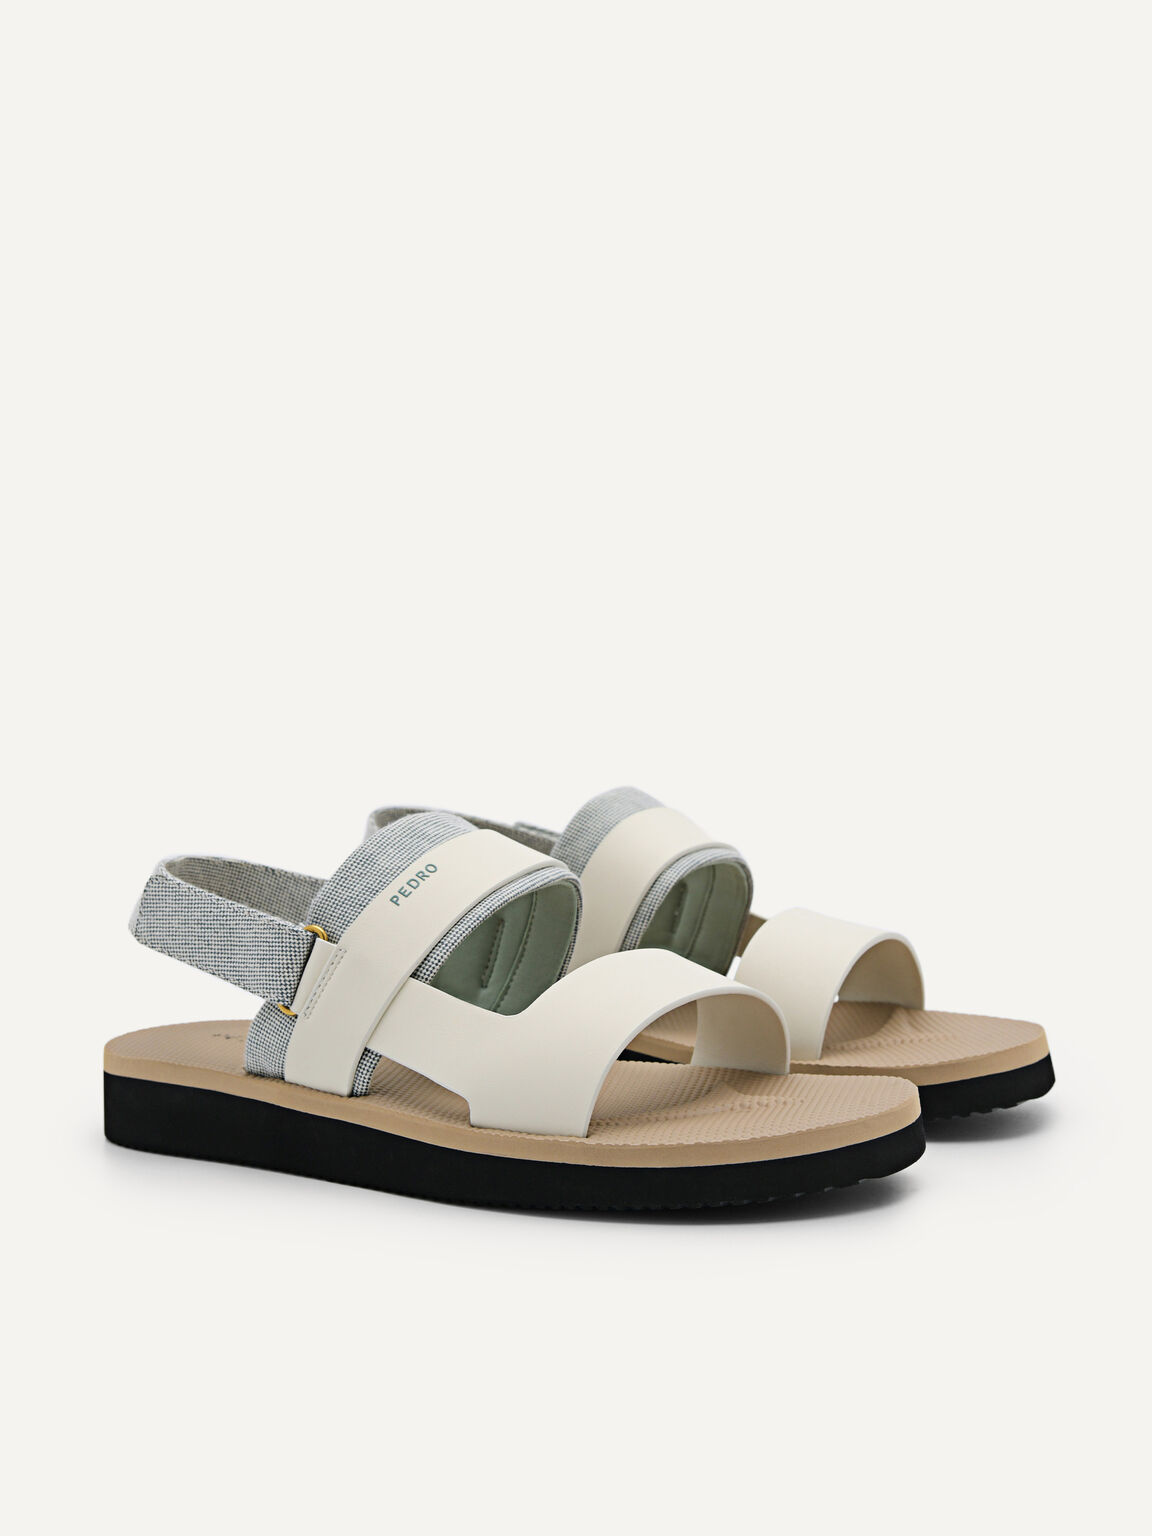 Backstrap Sandals, Turquoise, hi-res